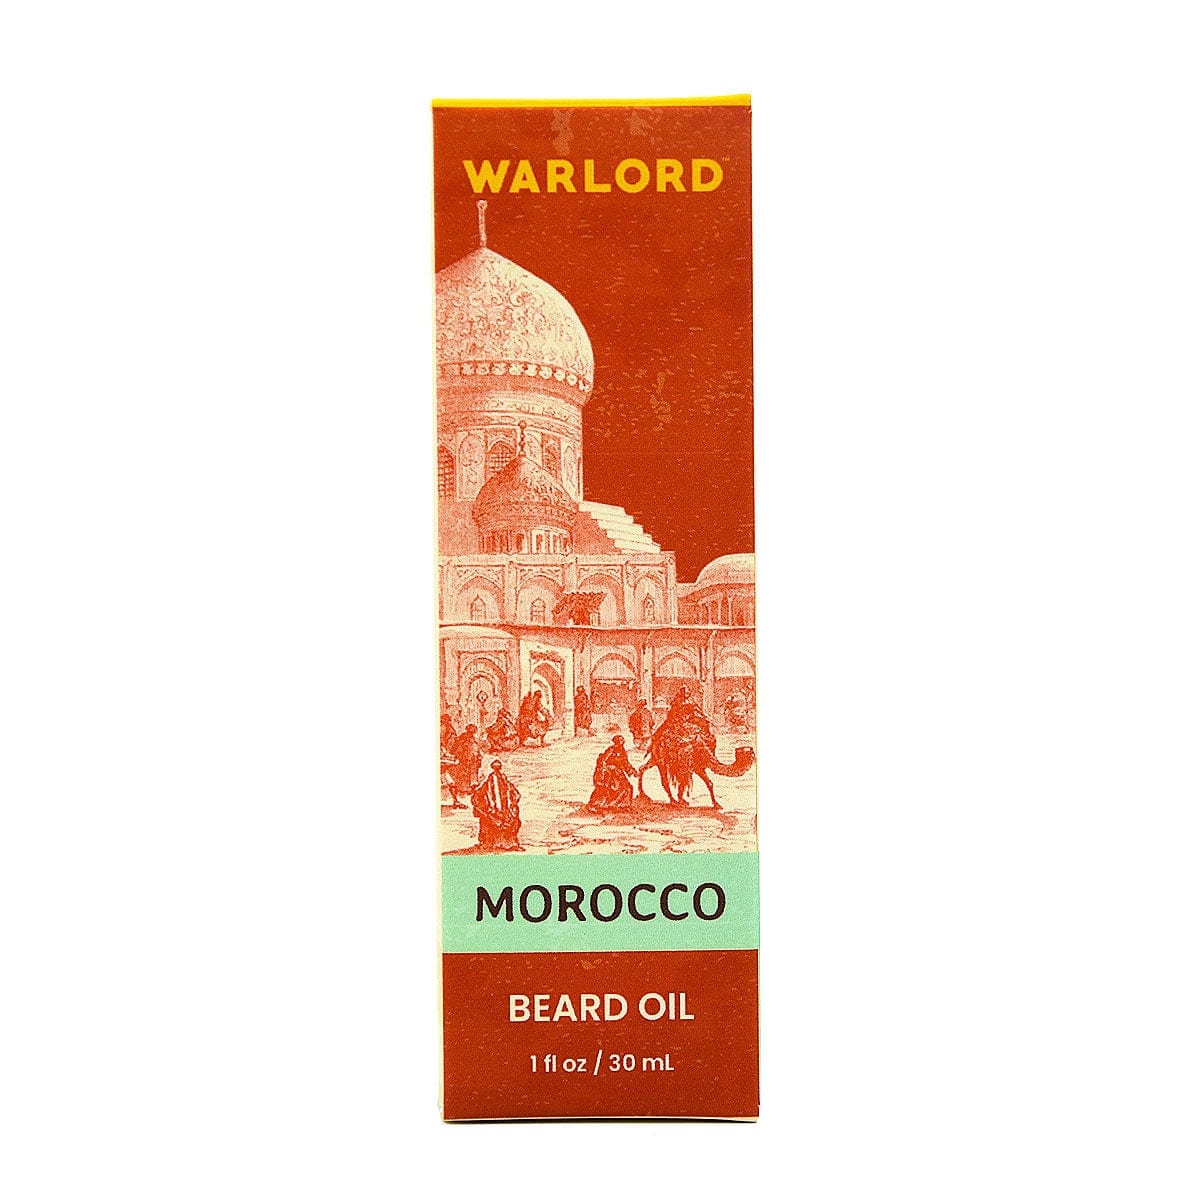 Morocco Beard Oil - Warlord - Men's Grooming Essentials